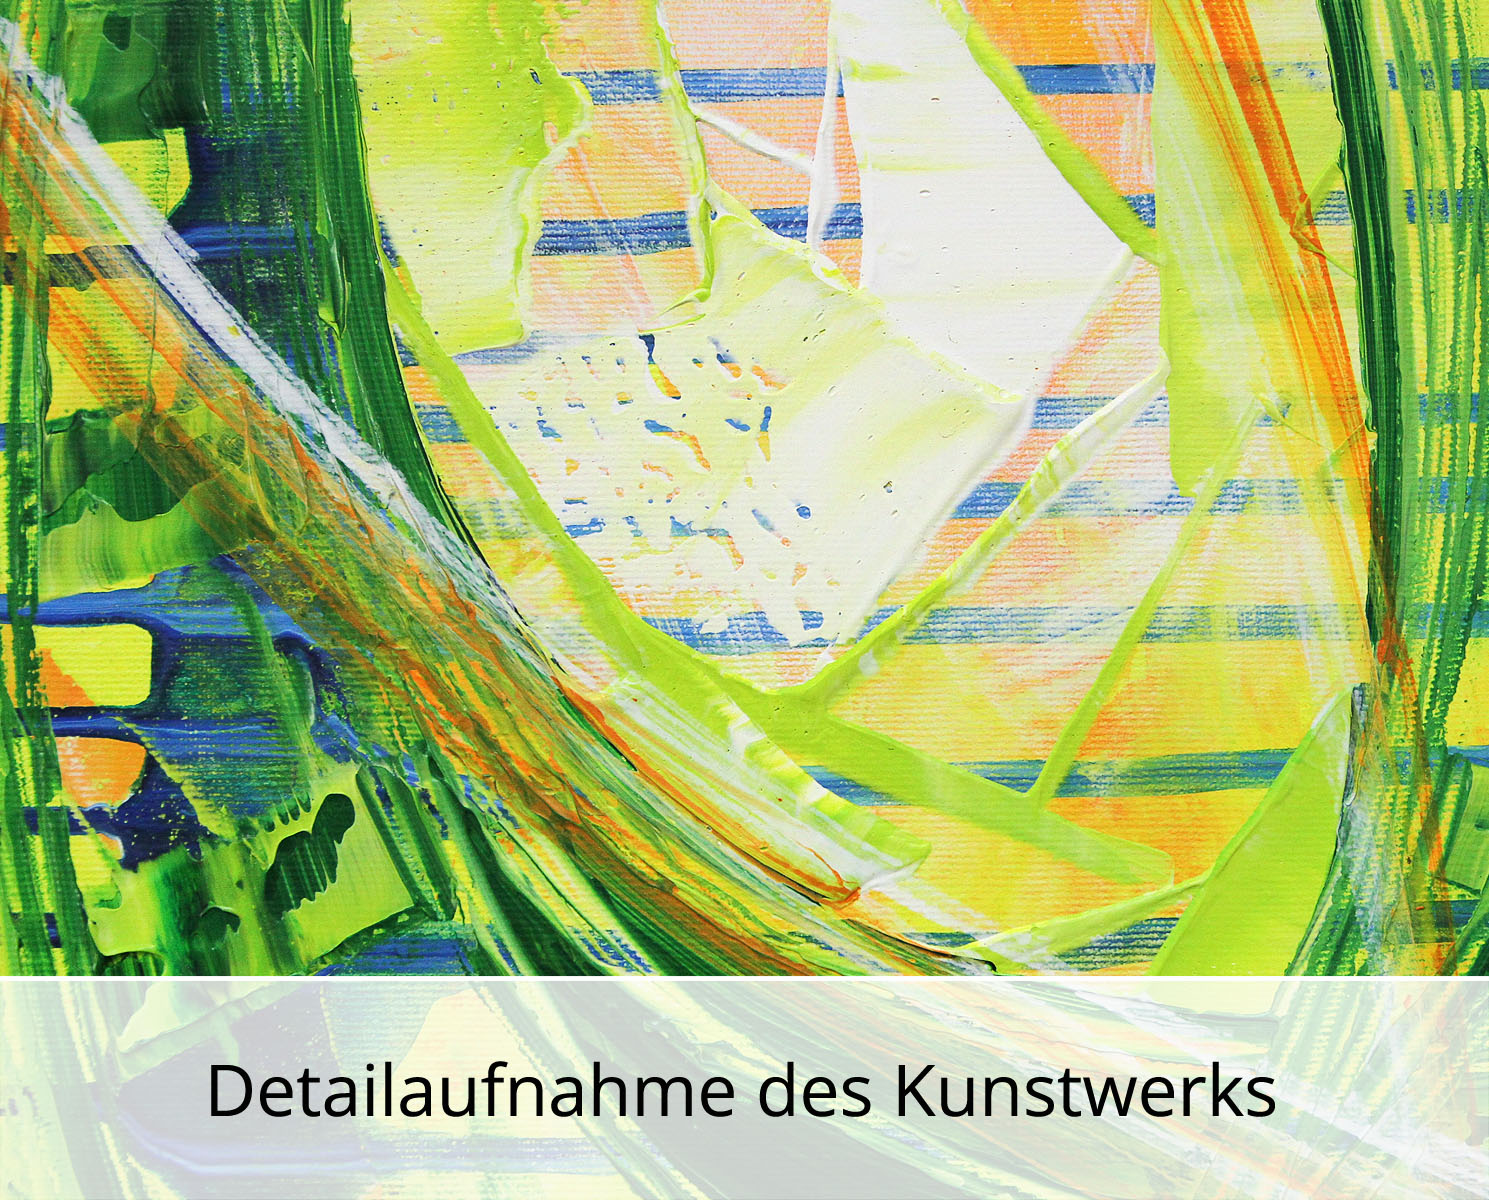 R. König: "Sommervision III", mehrteilige Acrylbilder, Originalgemälde (Unikat) (ri)